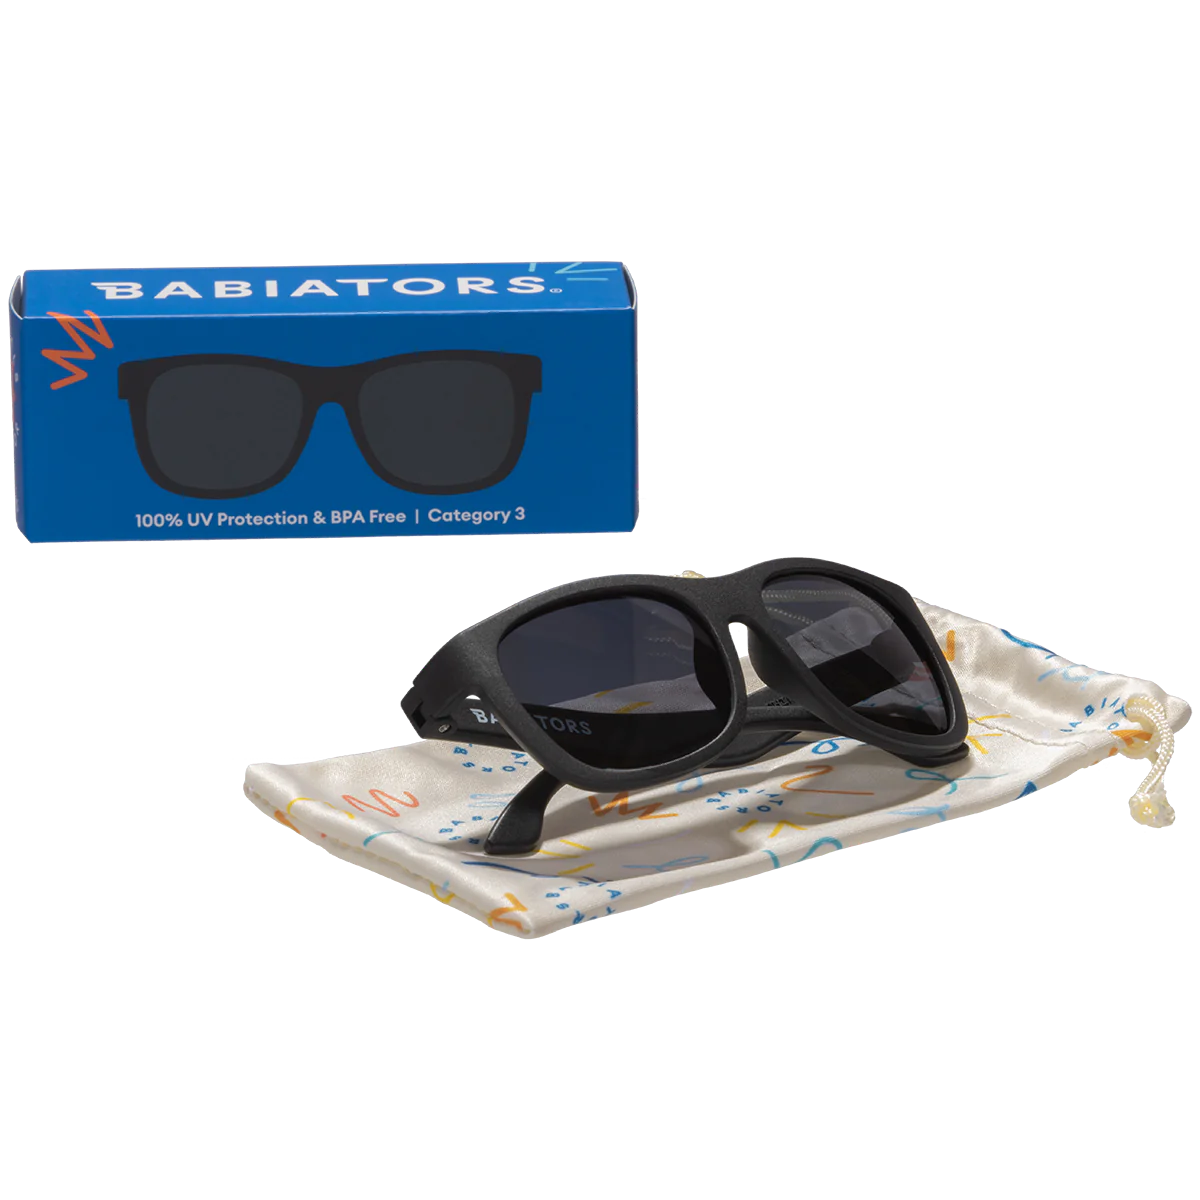 Babiators Original Navigators - Jet Black Sunglasses Babiators 